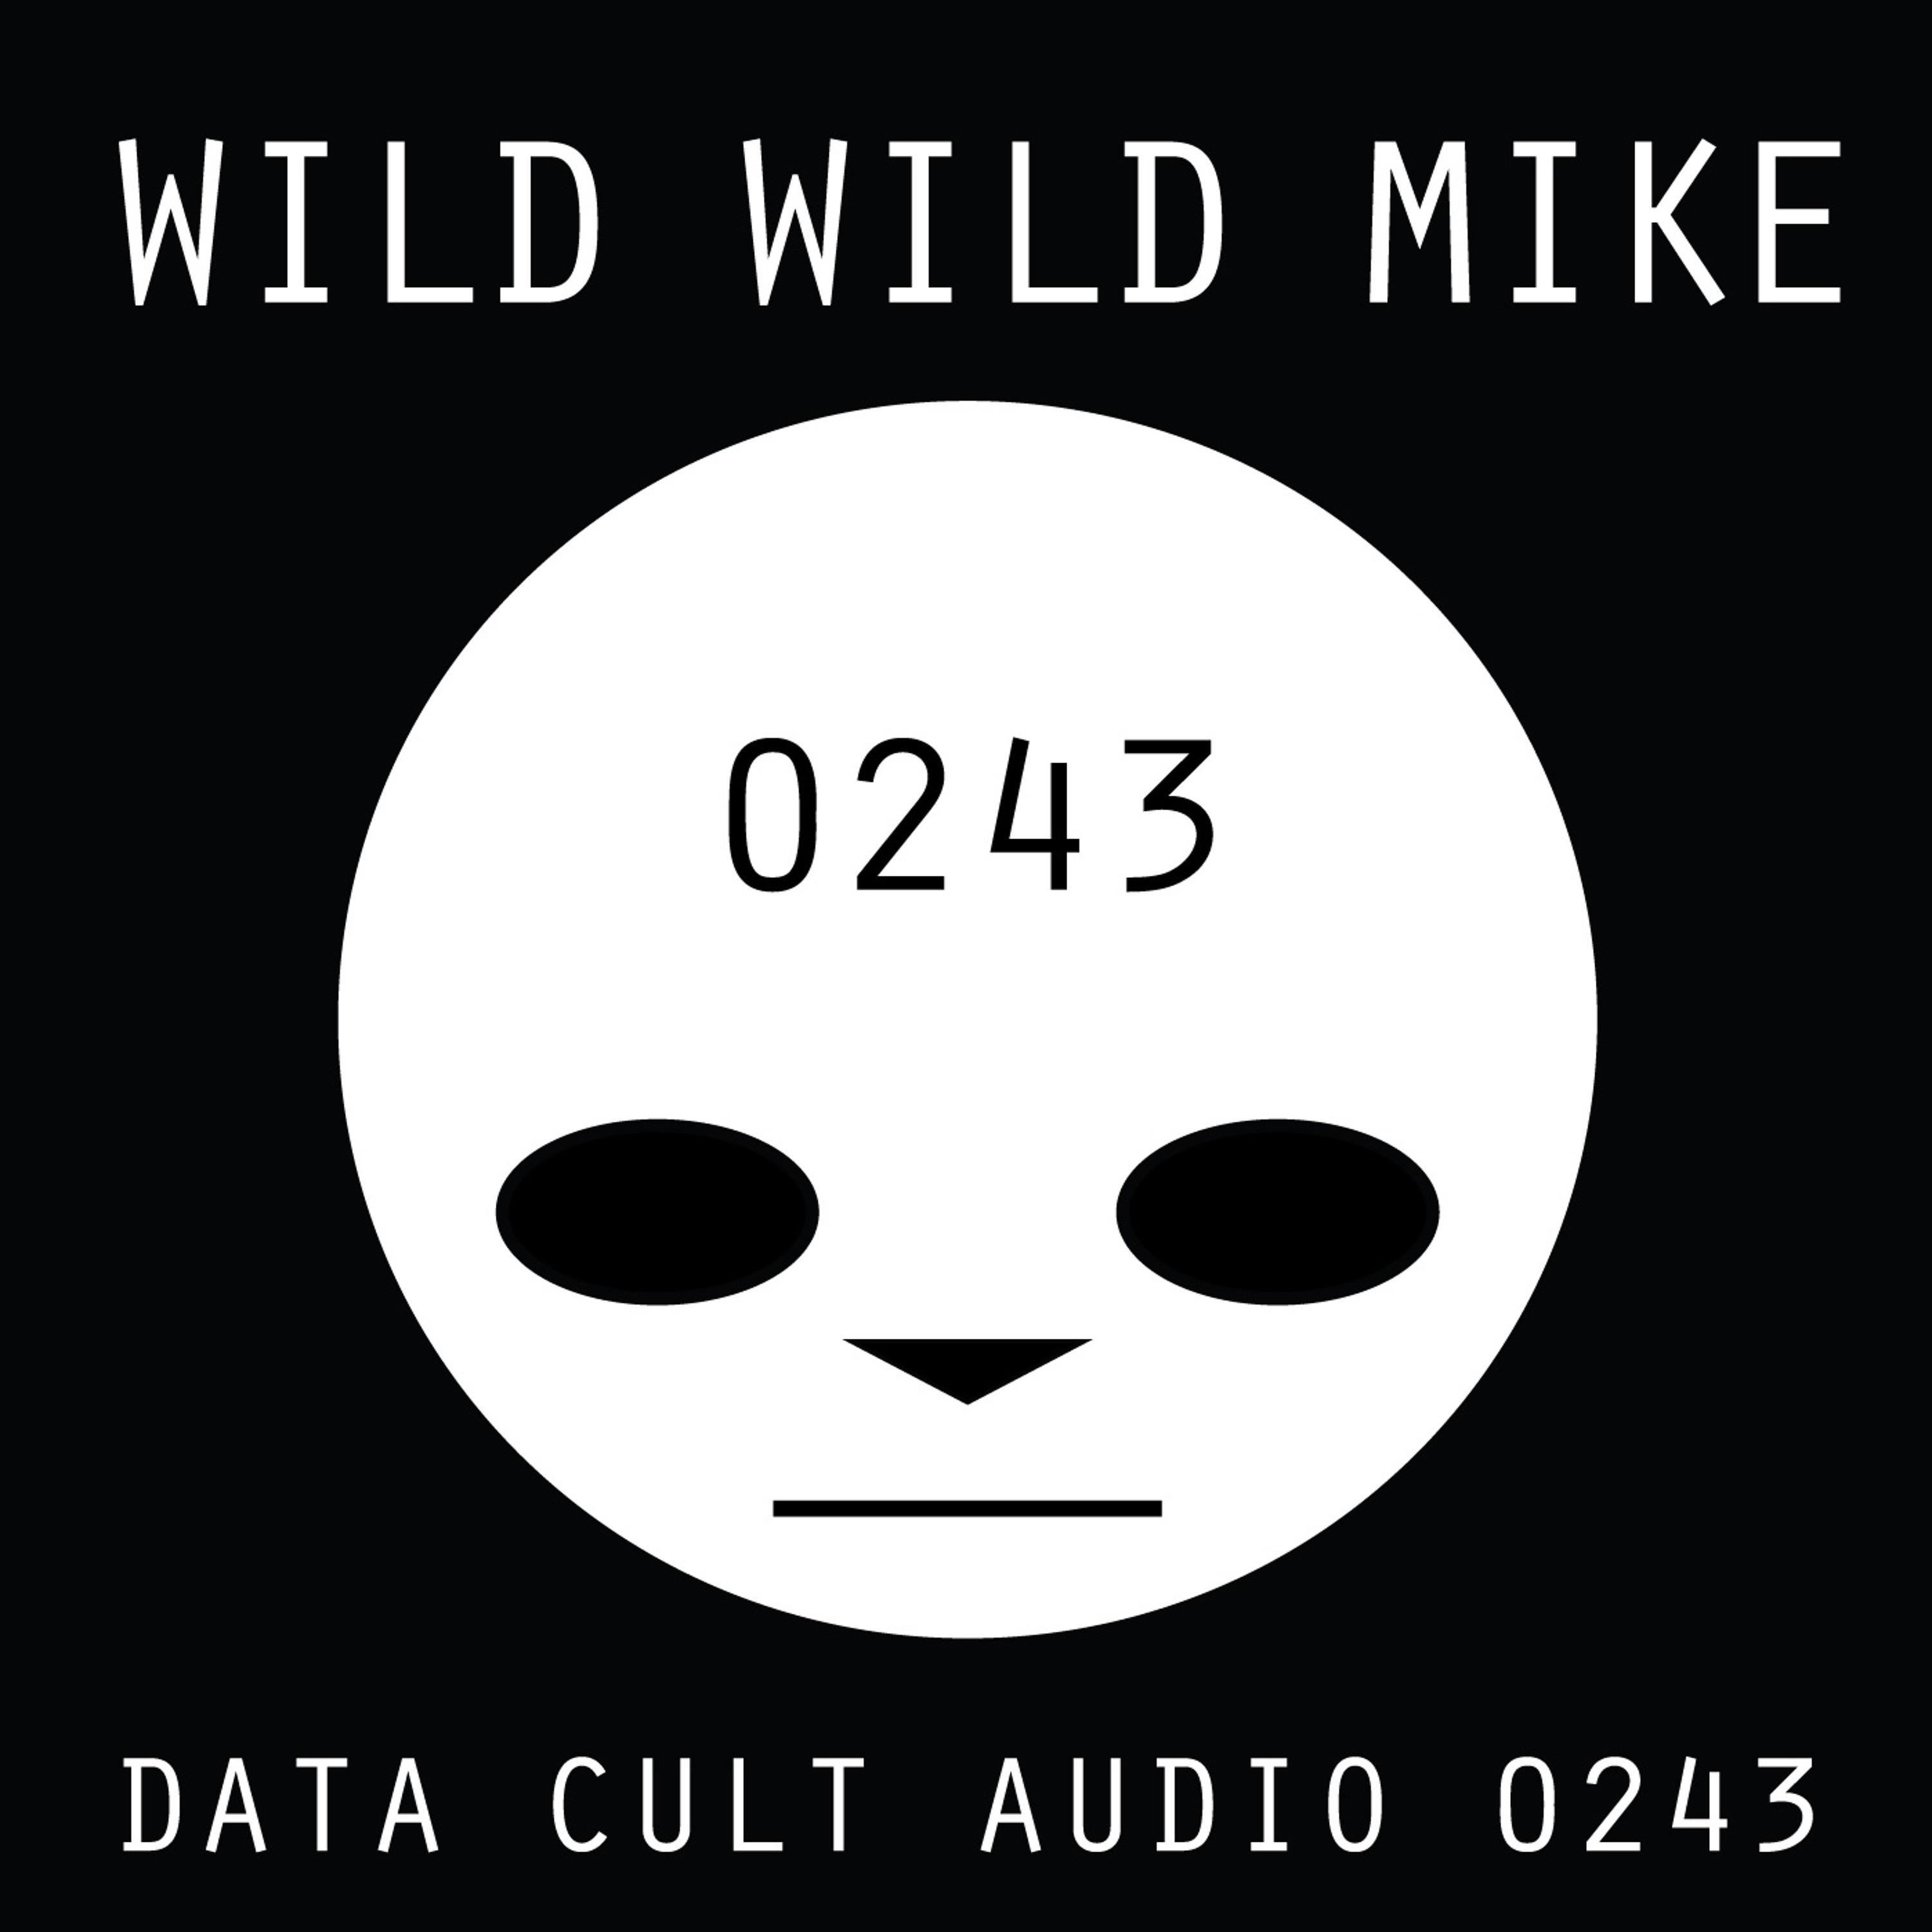 Data Cult Audio 0243 - Wild Wild Mike